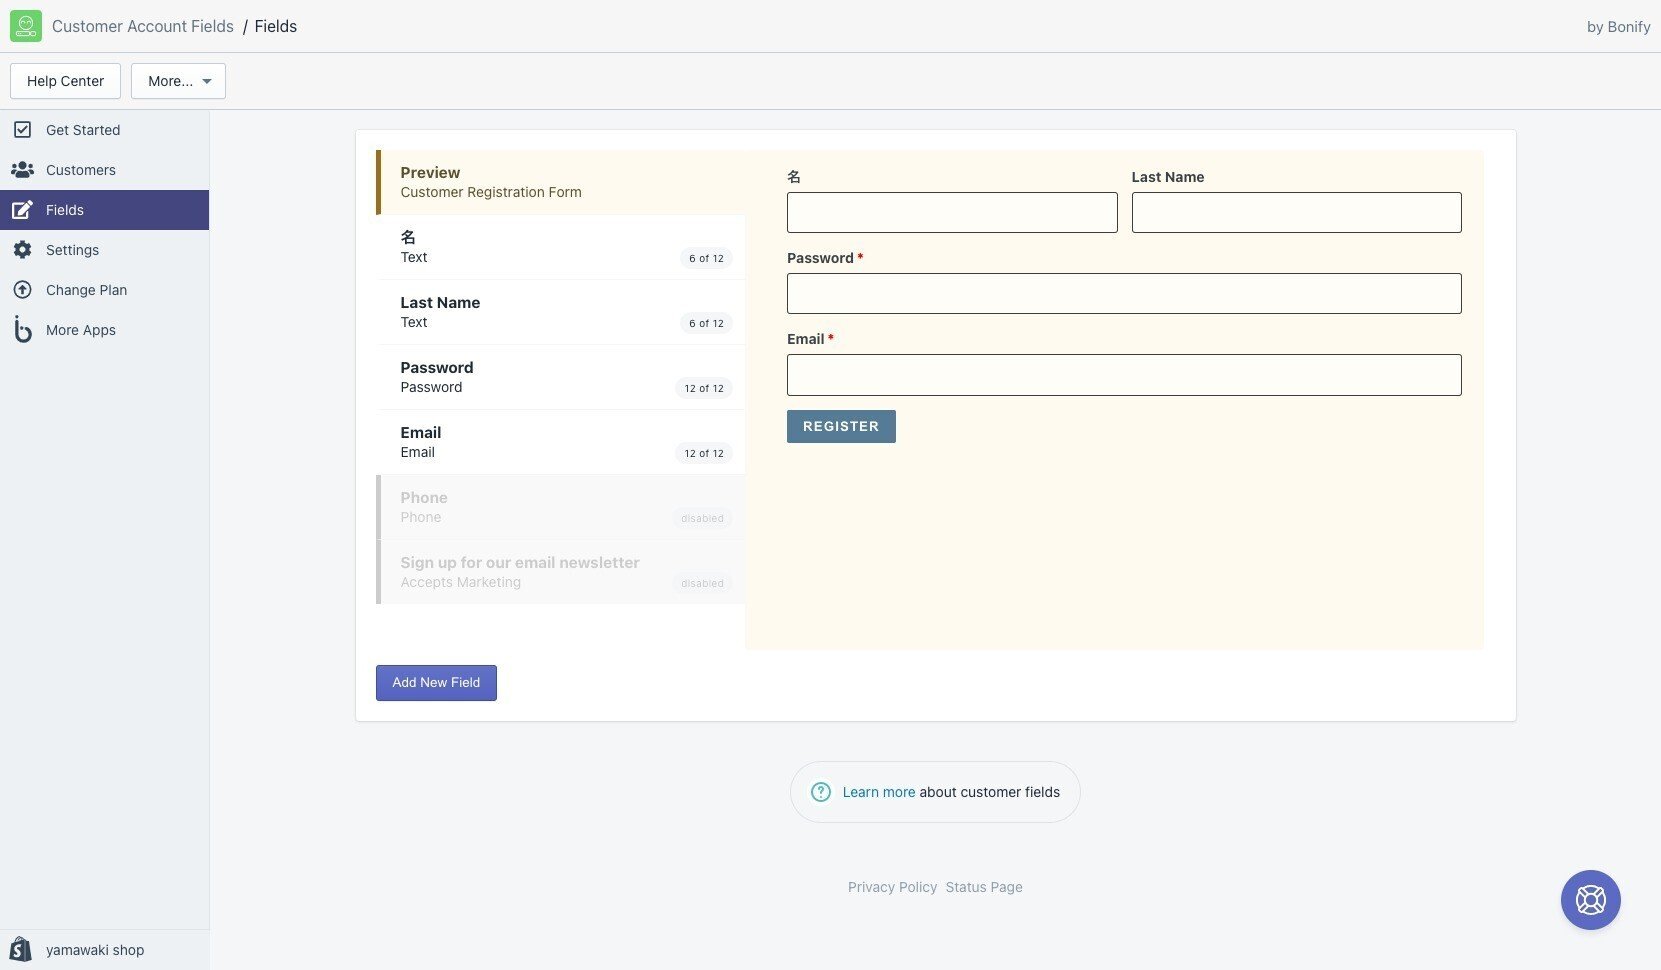 Shopifyアプリ解説：02】「Bonify Customer Account Fields」を利用して会員登録フォームを作成する方法｜コロニーインタラクティブ株式会社  / Colony Interactive Inc.